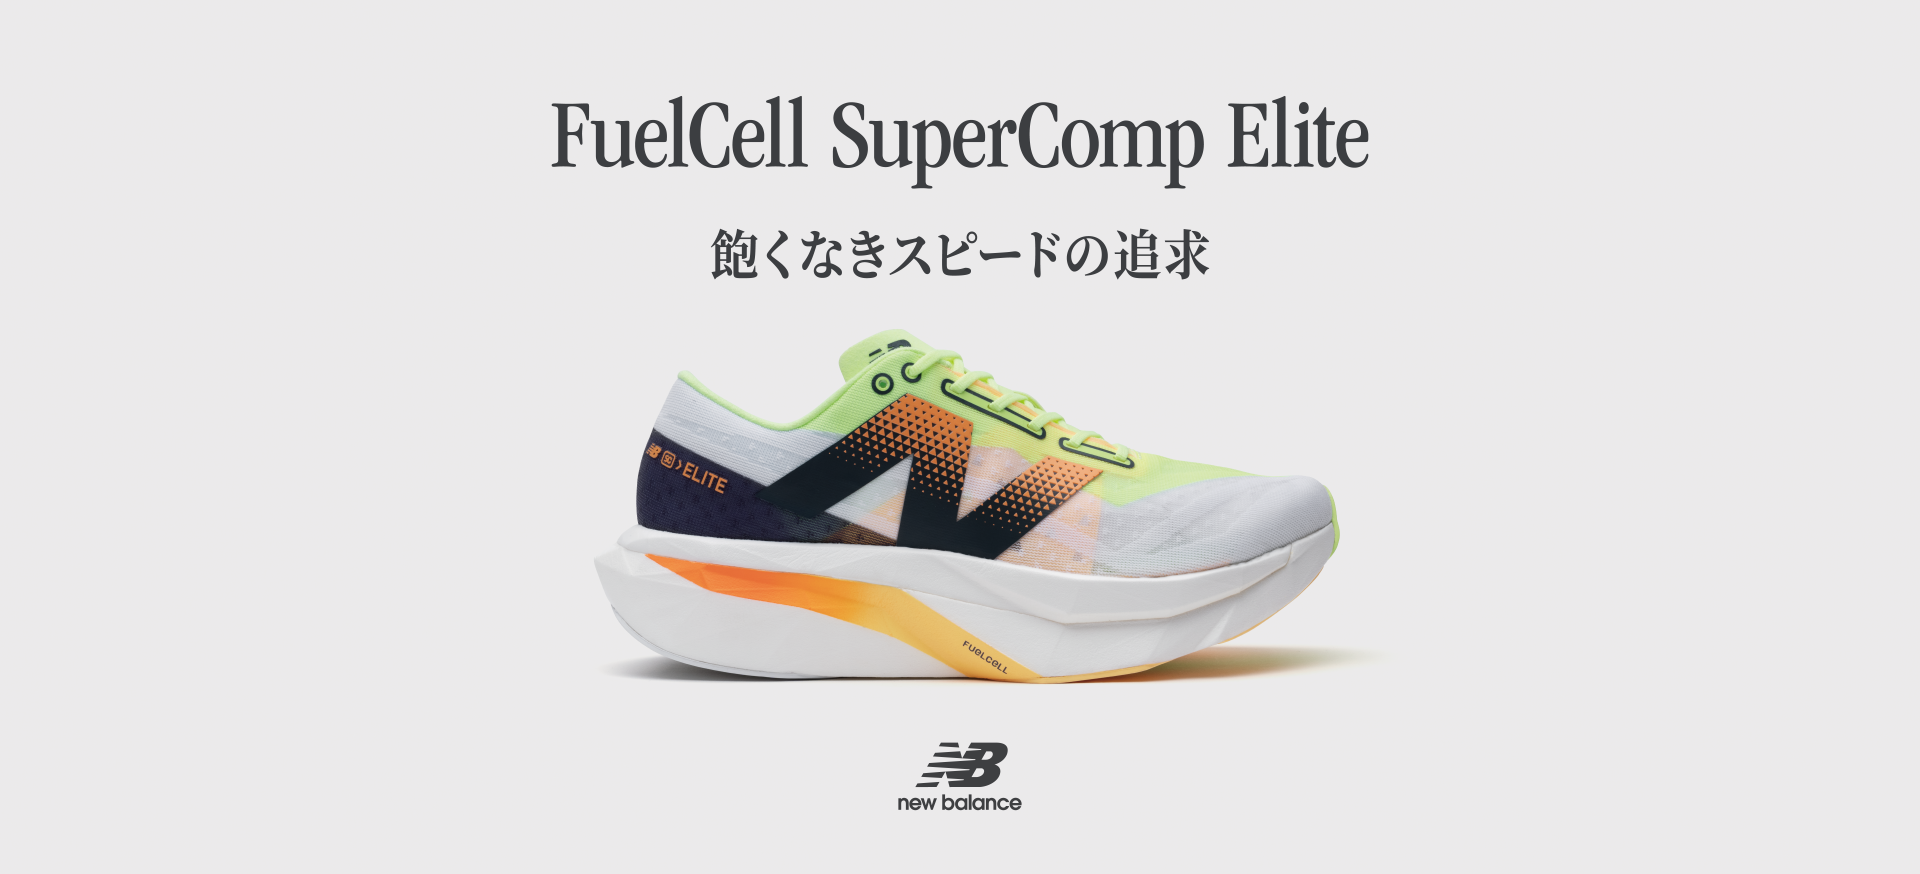 FuelCell Propel v4. レースと同じ感覚で、弾む力を乗りこなす。